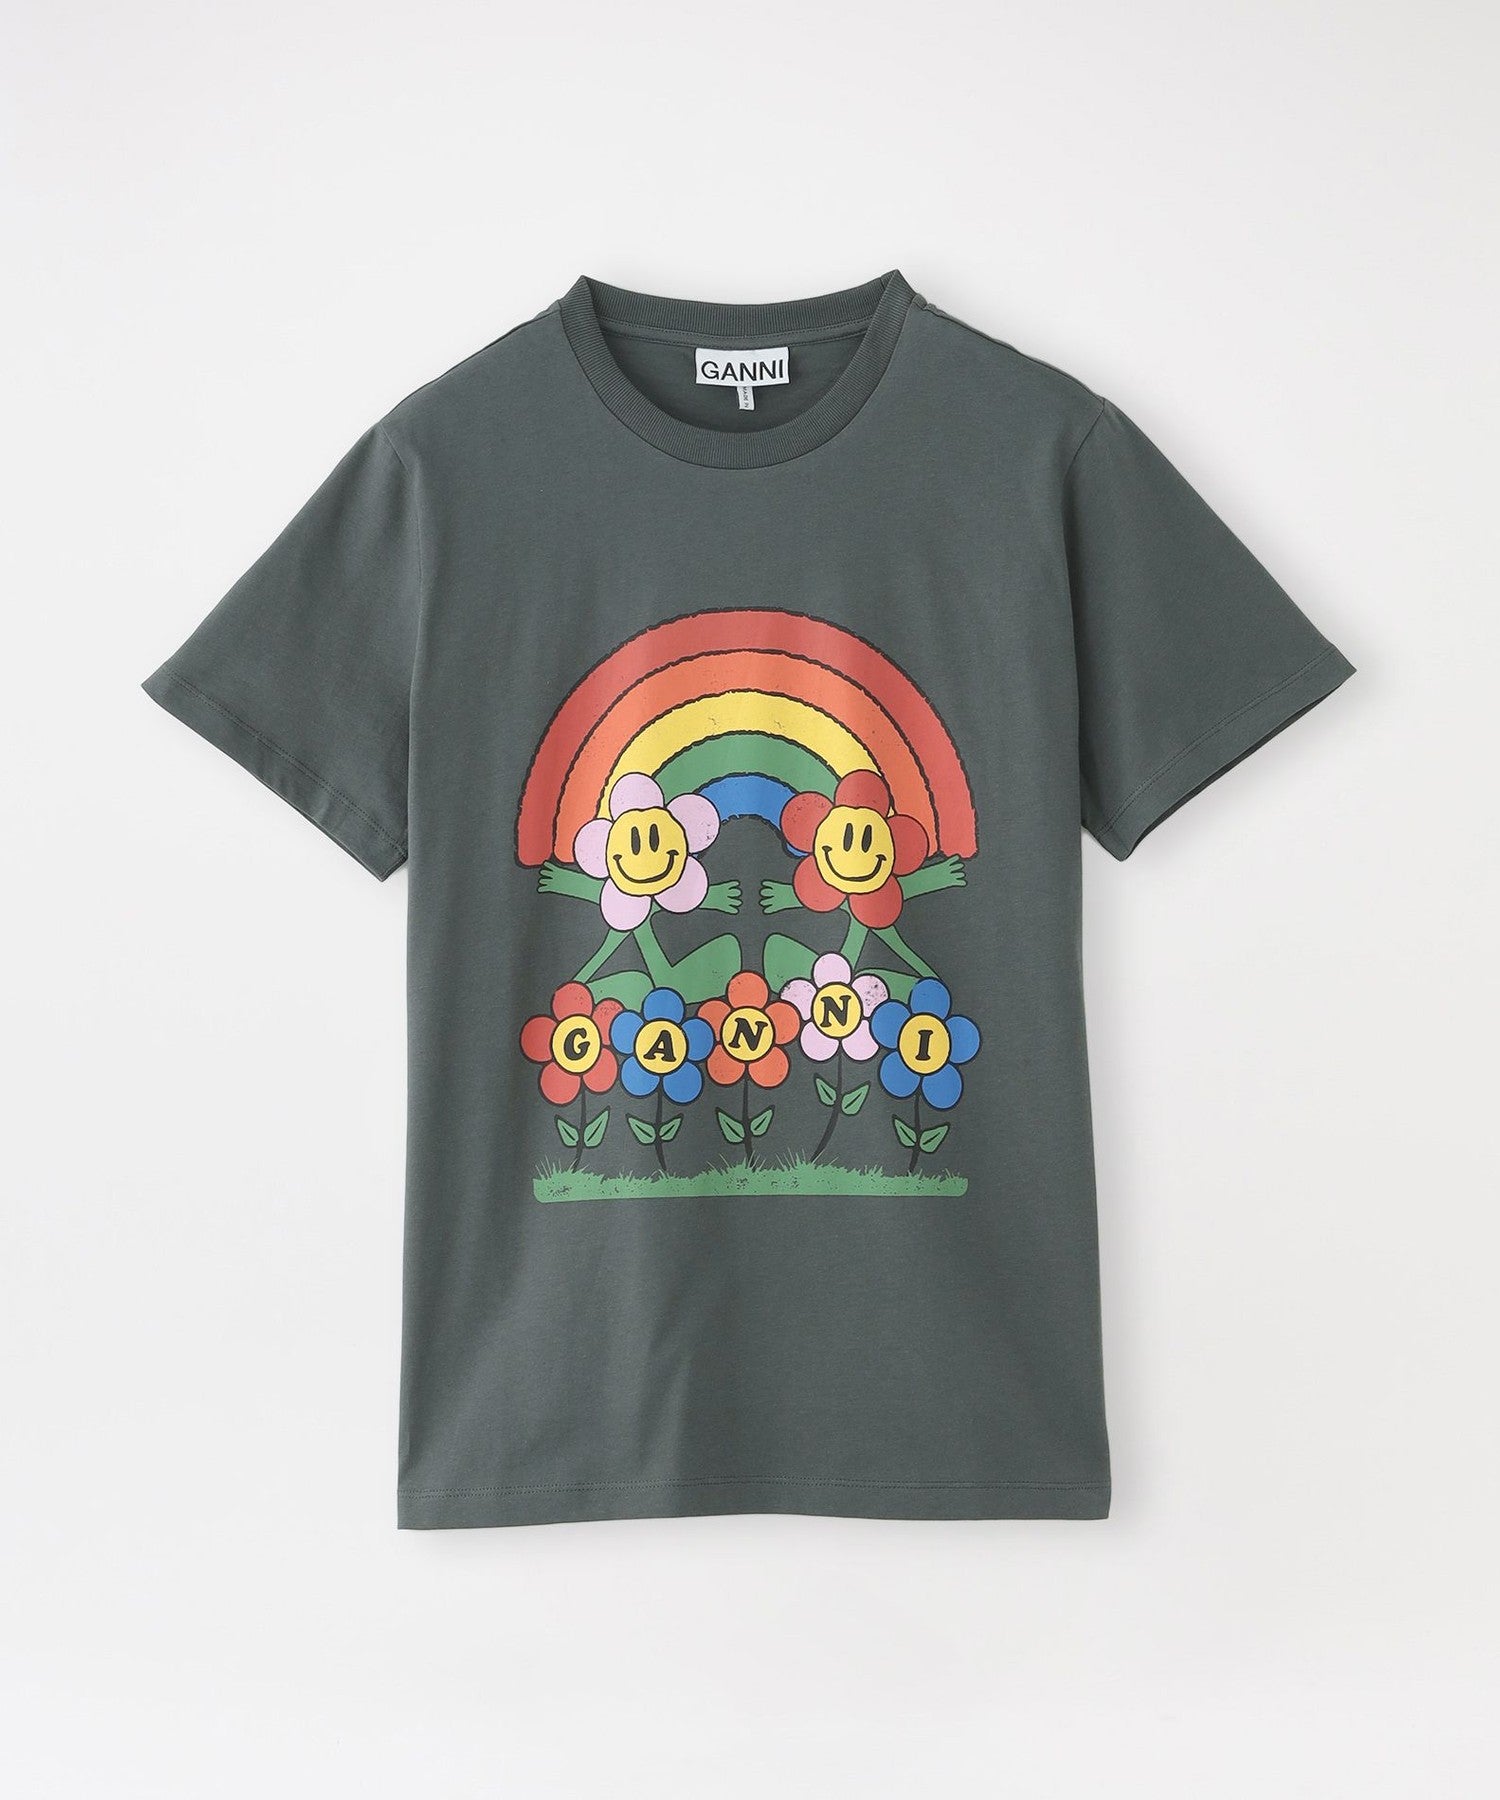 GANNI】Tシャツ BASIC JERSEY RAINBOW RELAXED T-SHIRT T3555(トップス 